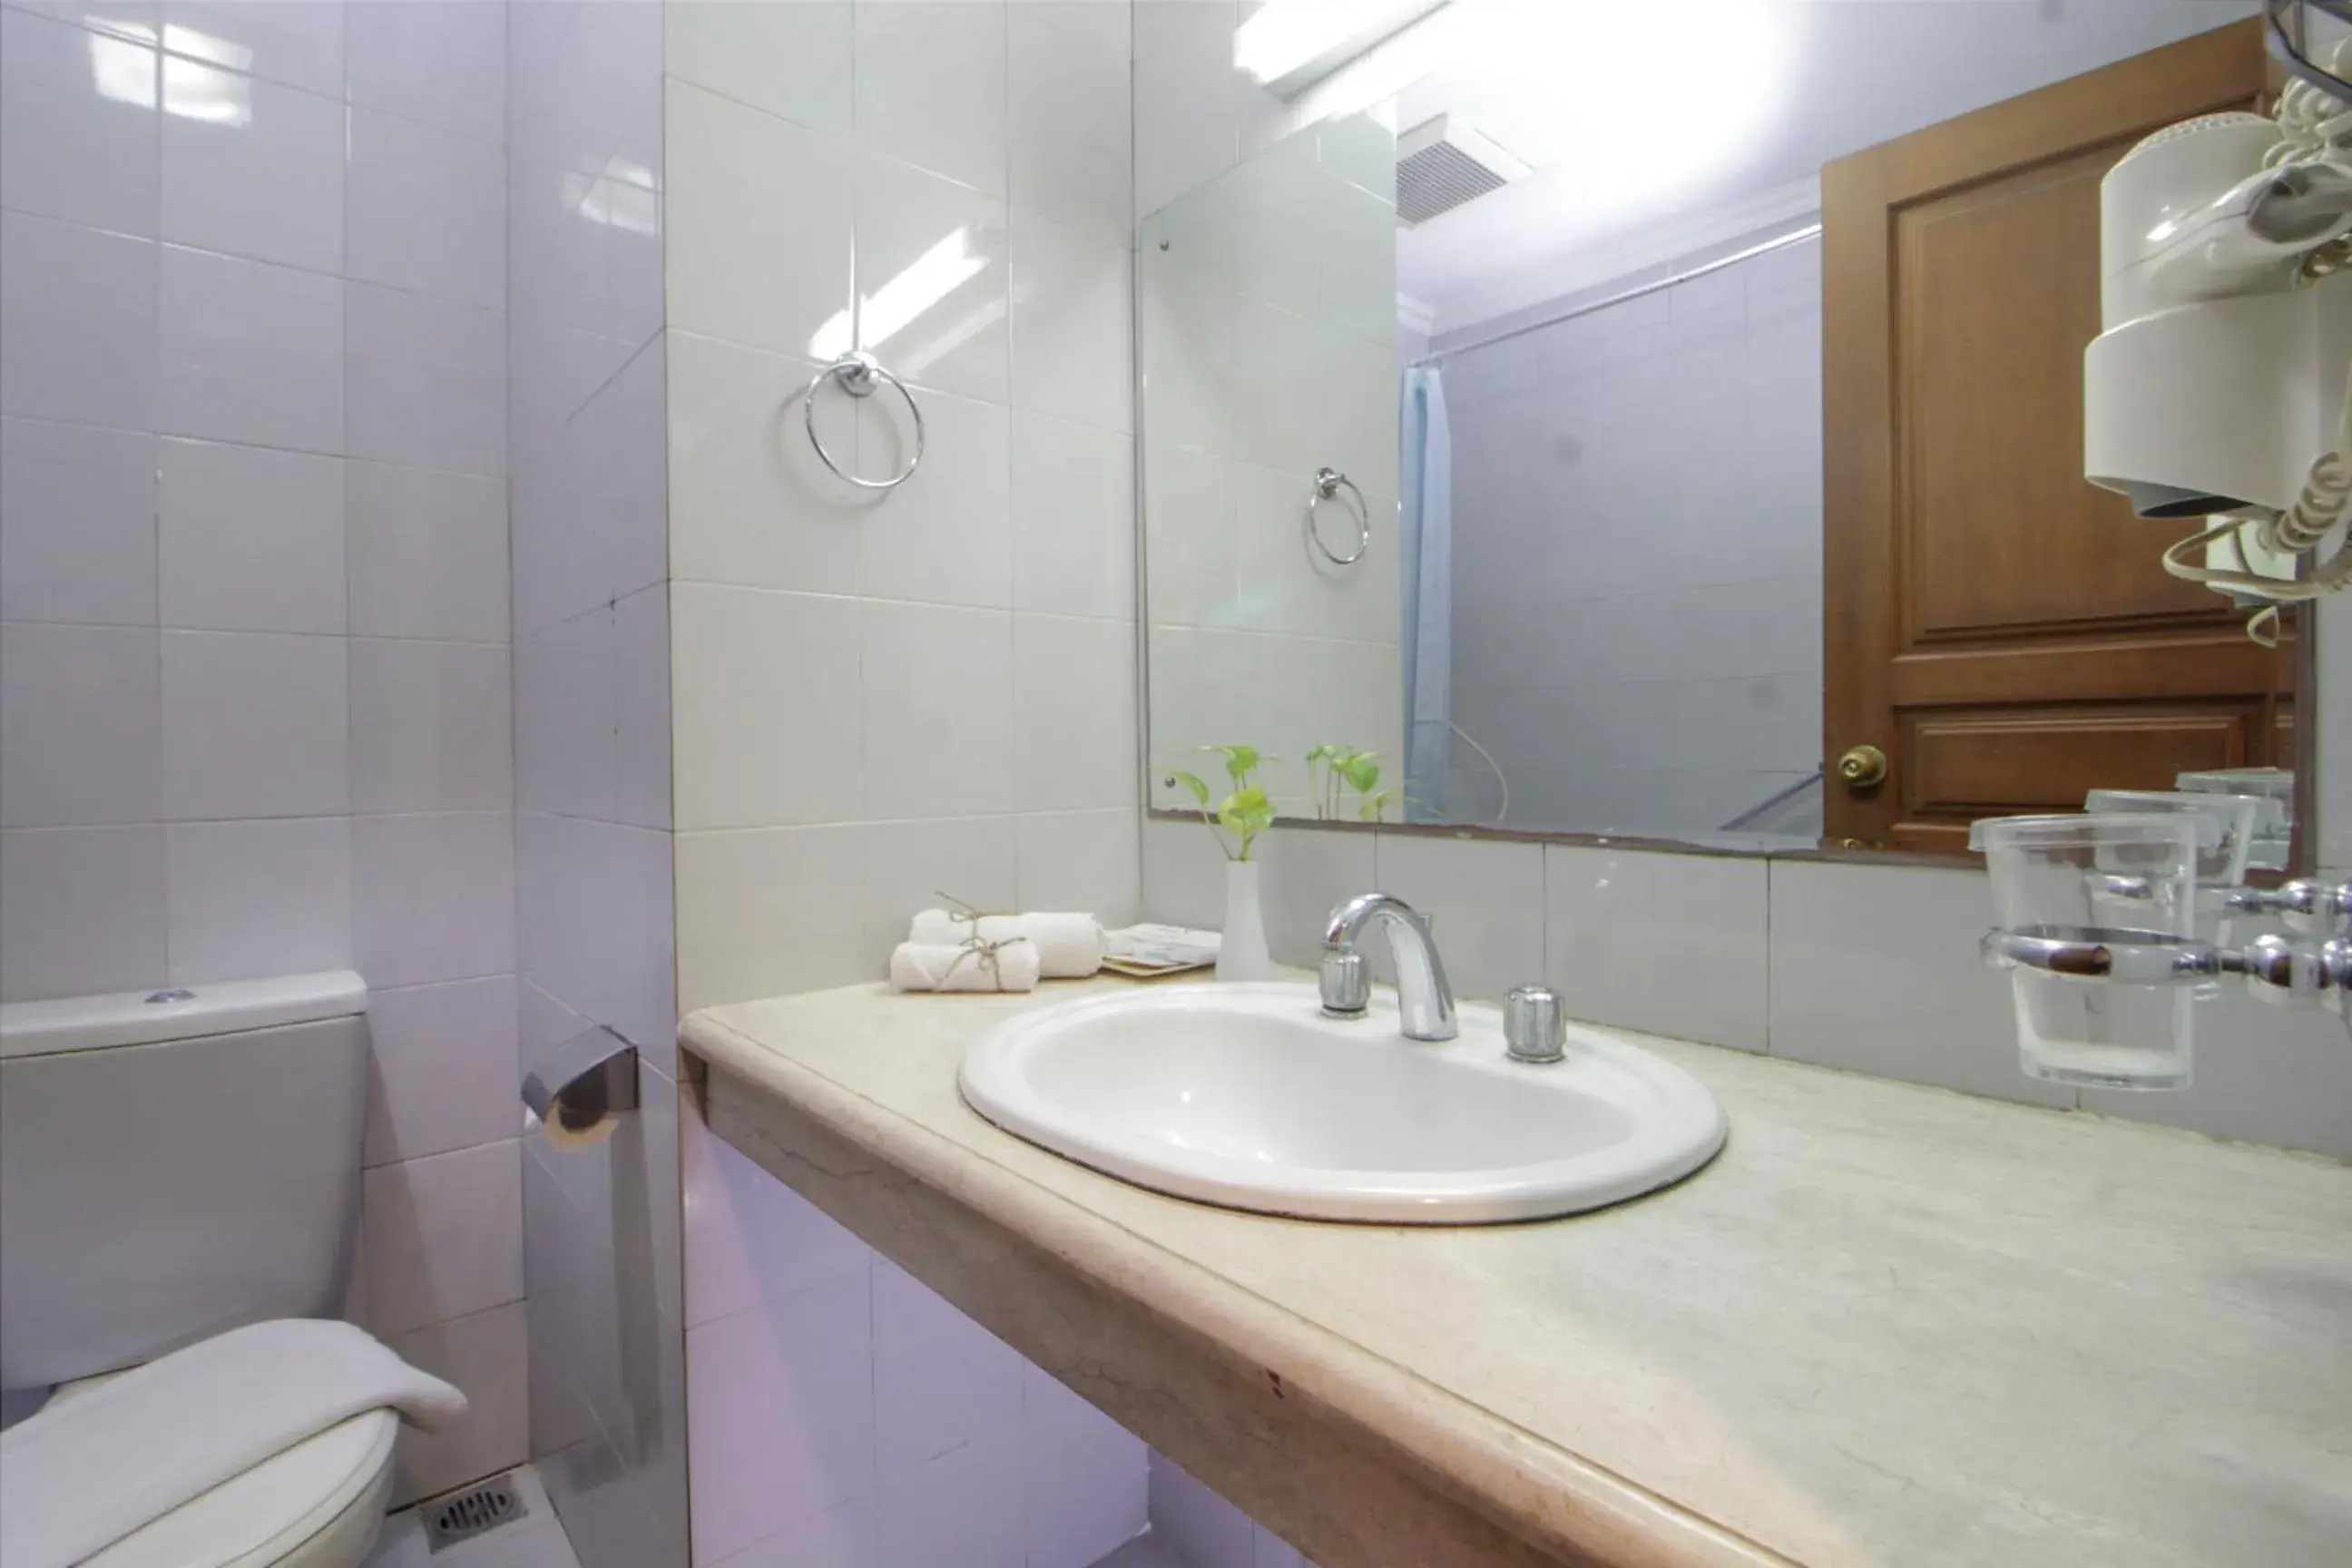 Bathroom in Bisanta Bidakara Surabaya